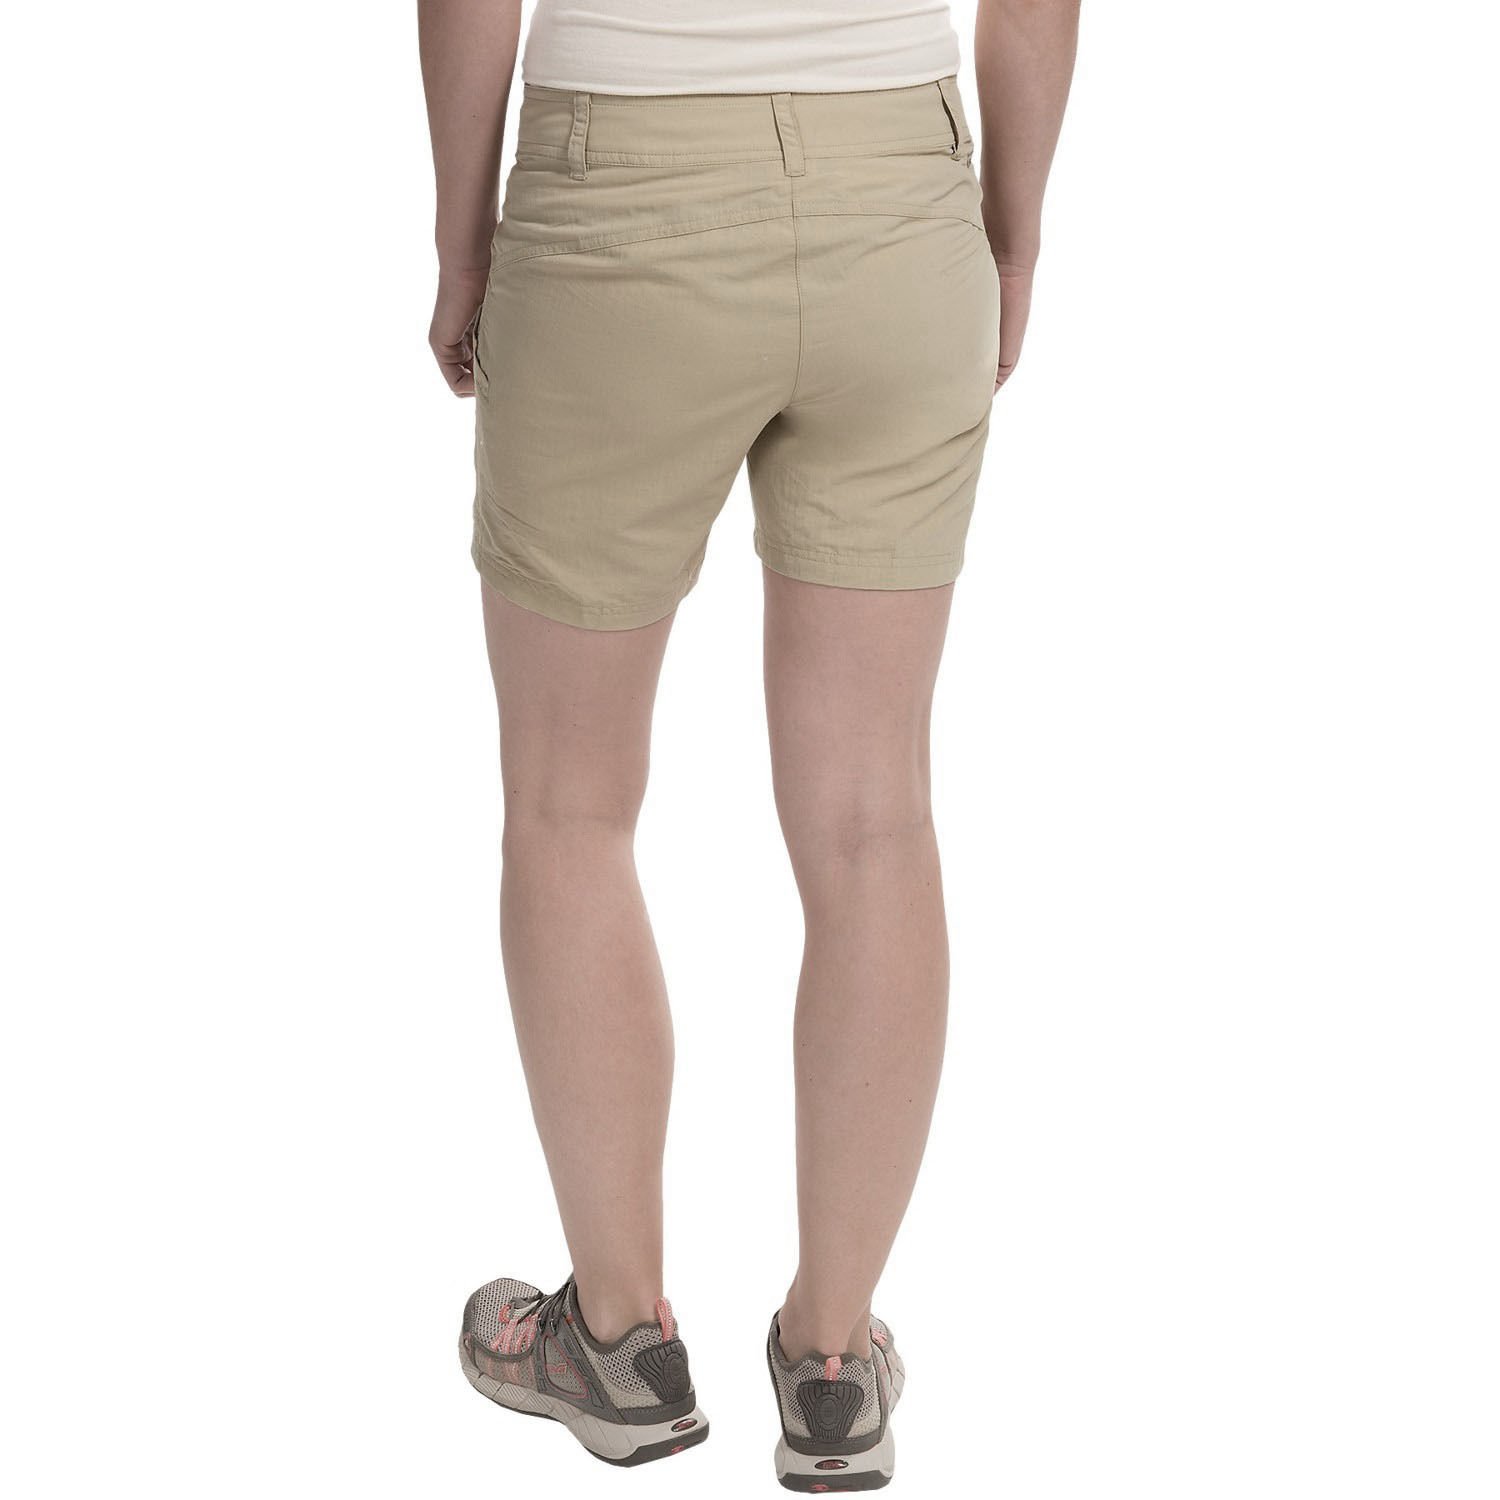 NWT EXOFFICIO Nomad shorts 2 women's khaki water resistant hiking ...